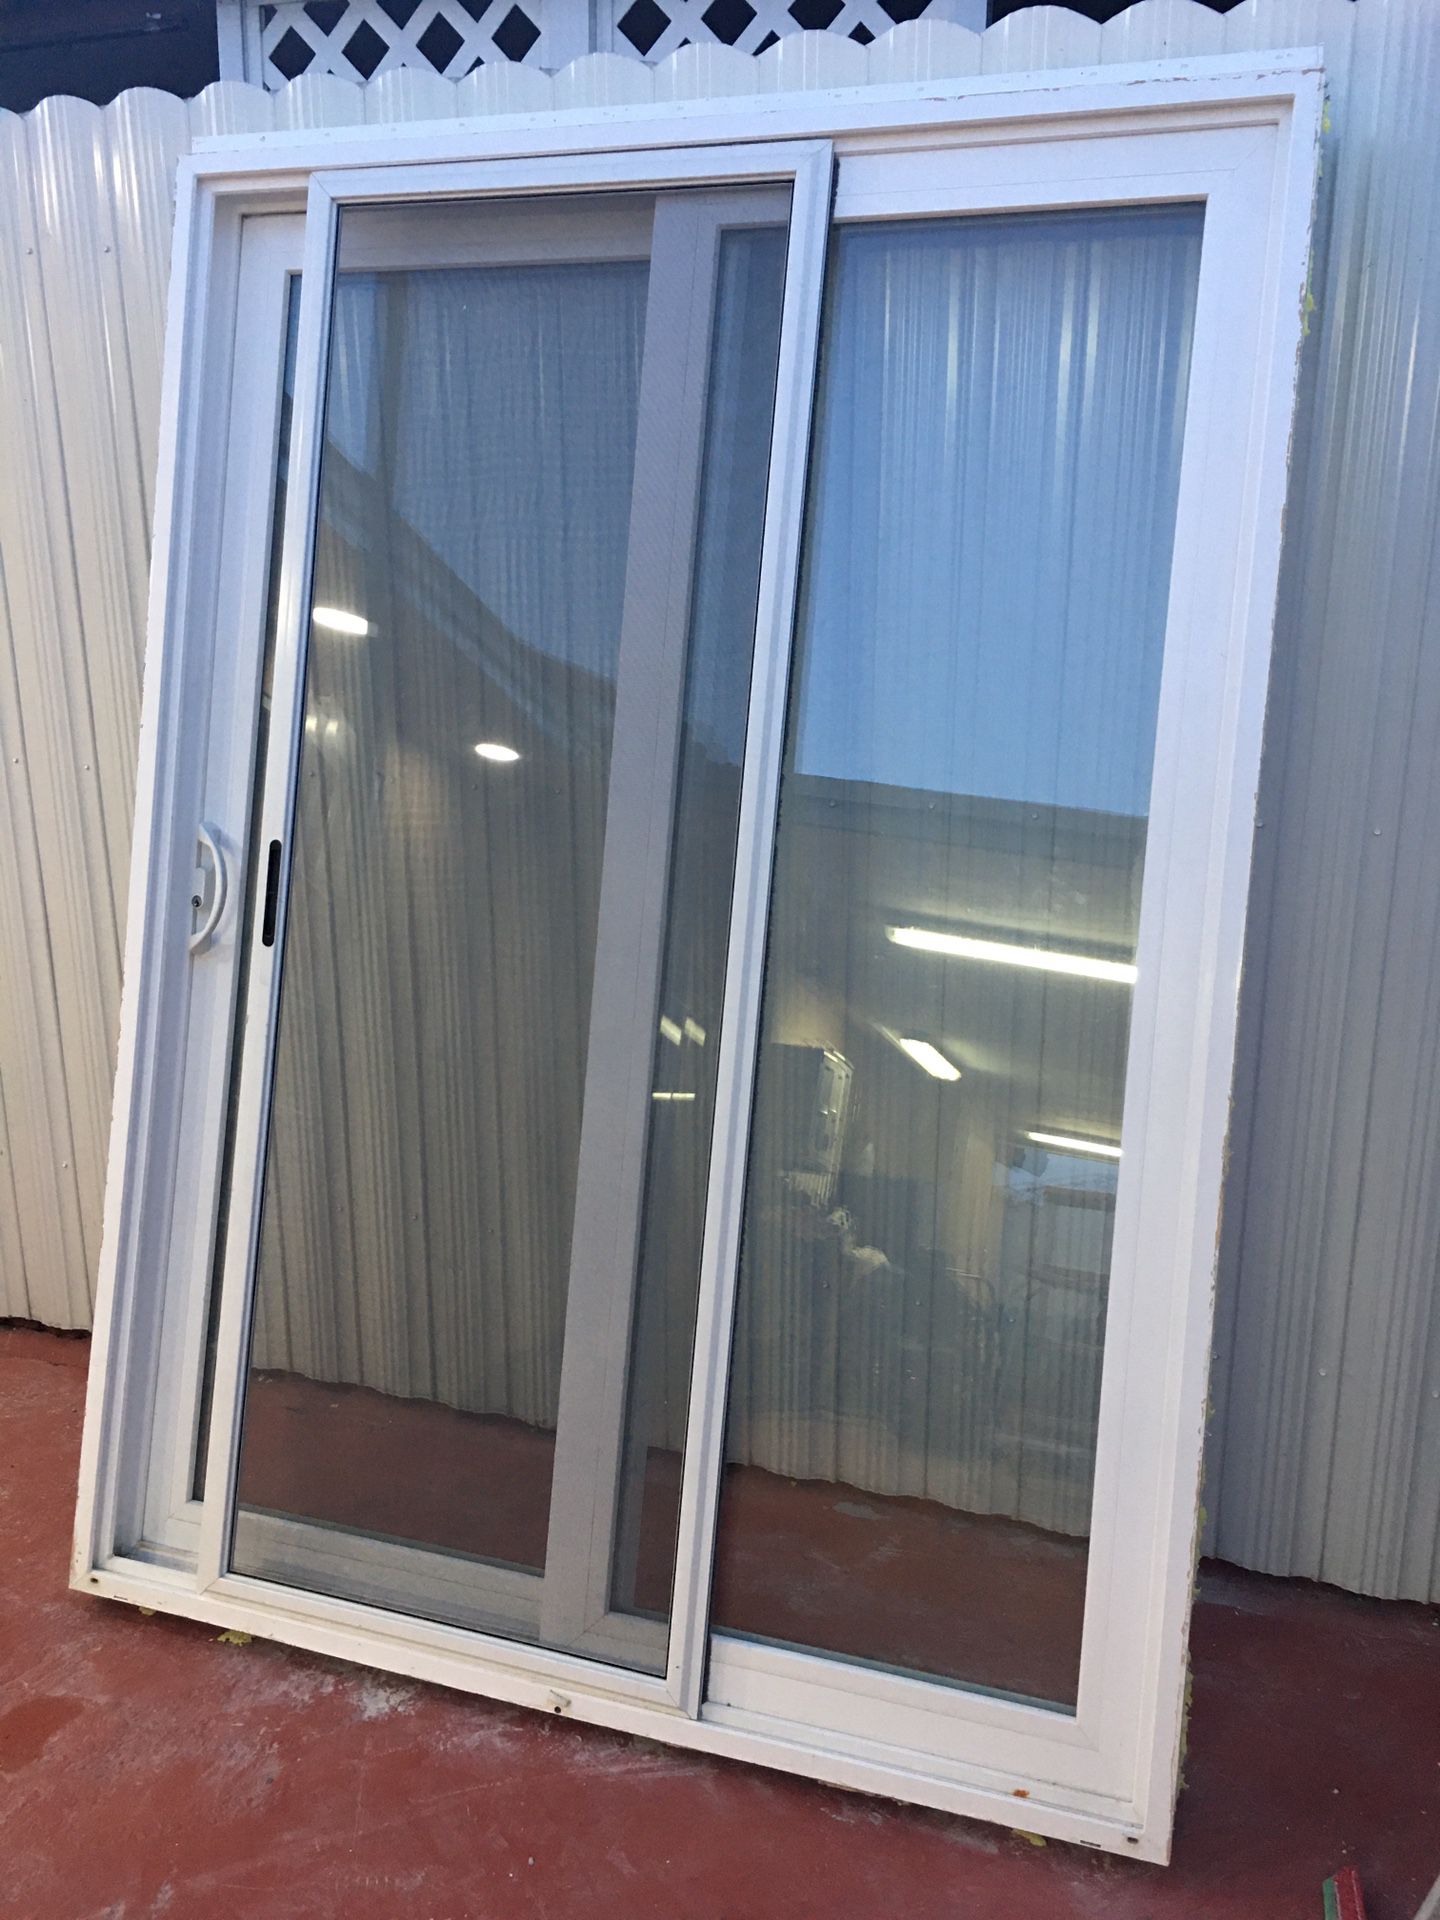 Fiberglass double glass sliding doors in excellent condition